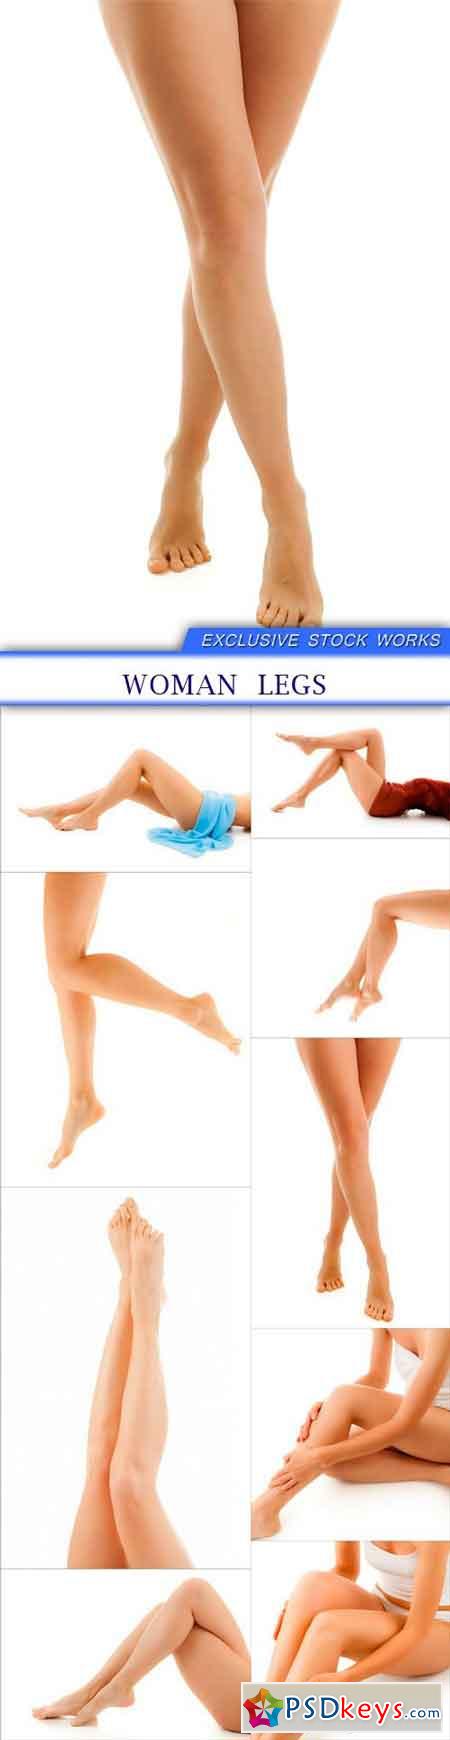 Woman legs 9X JPEG